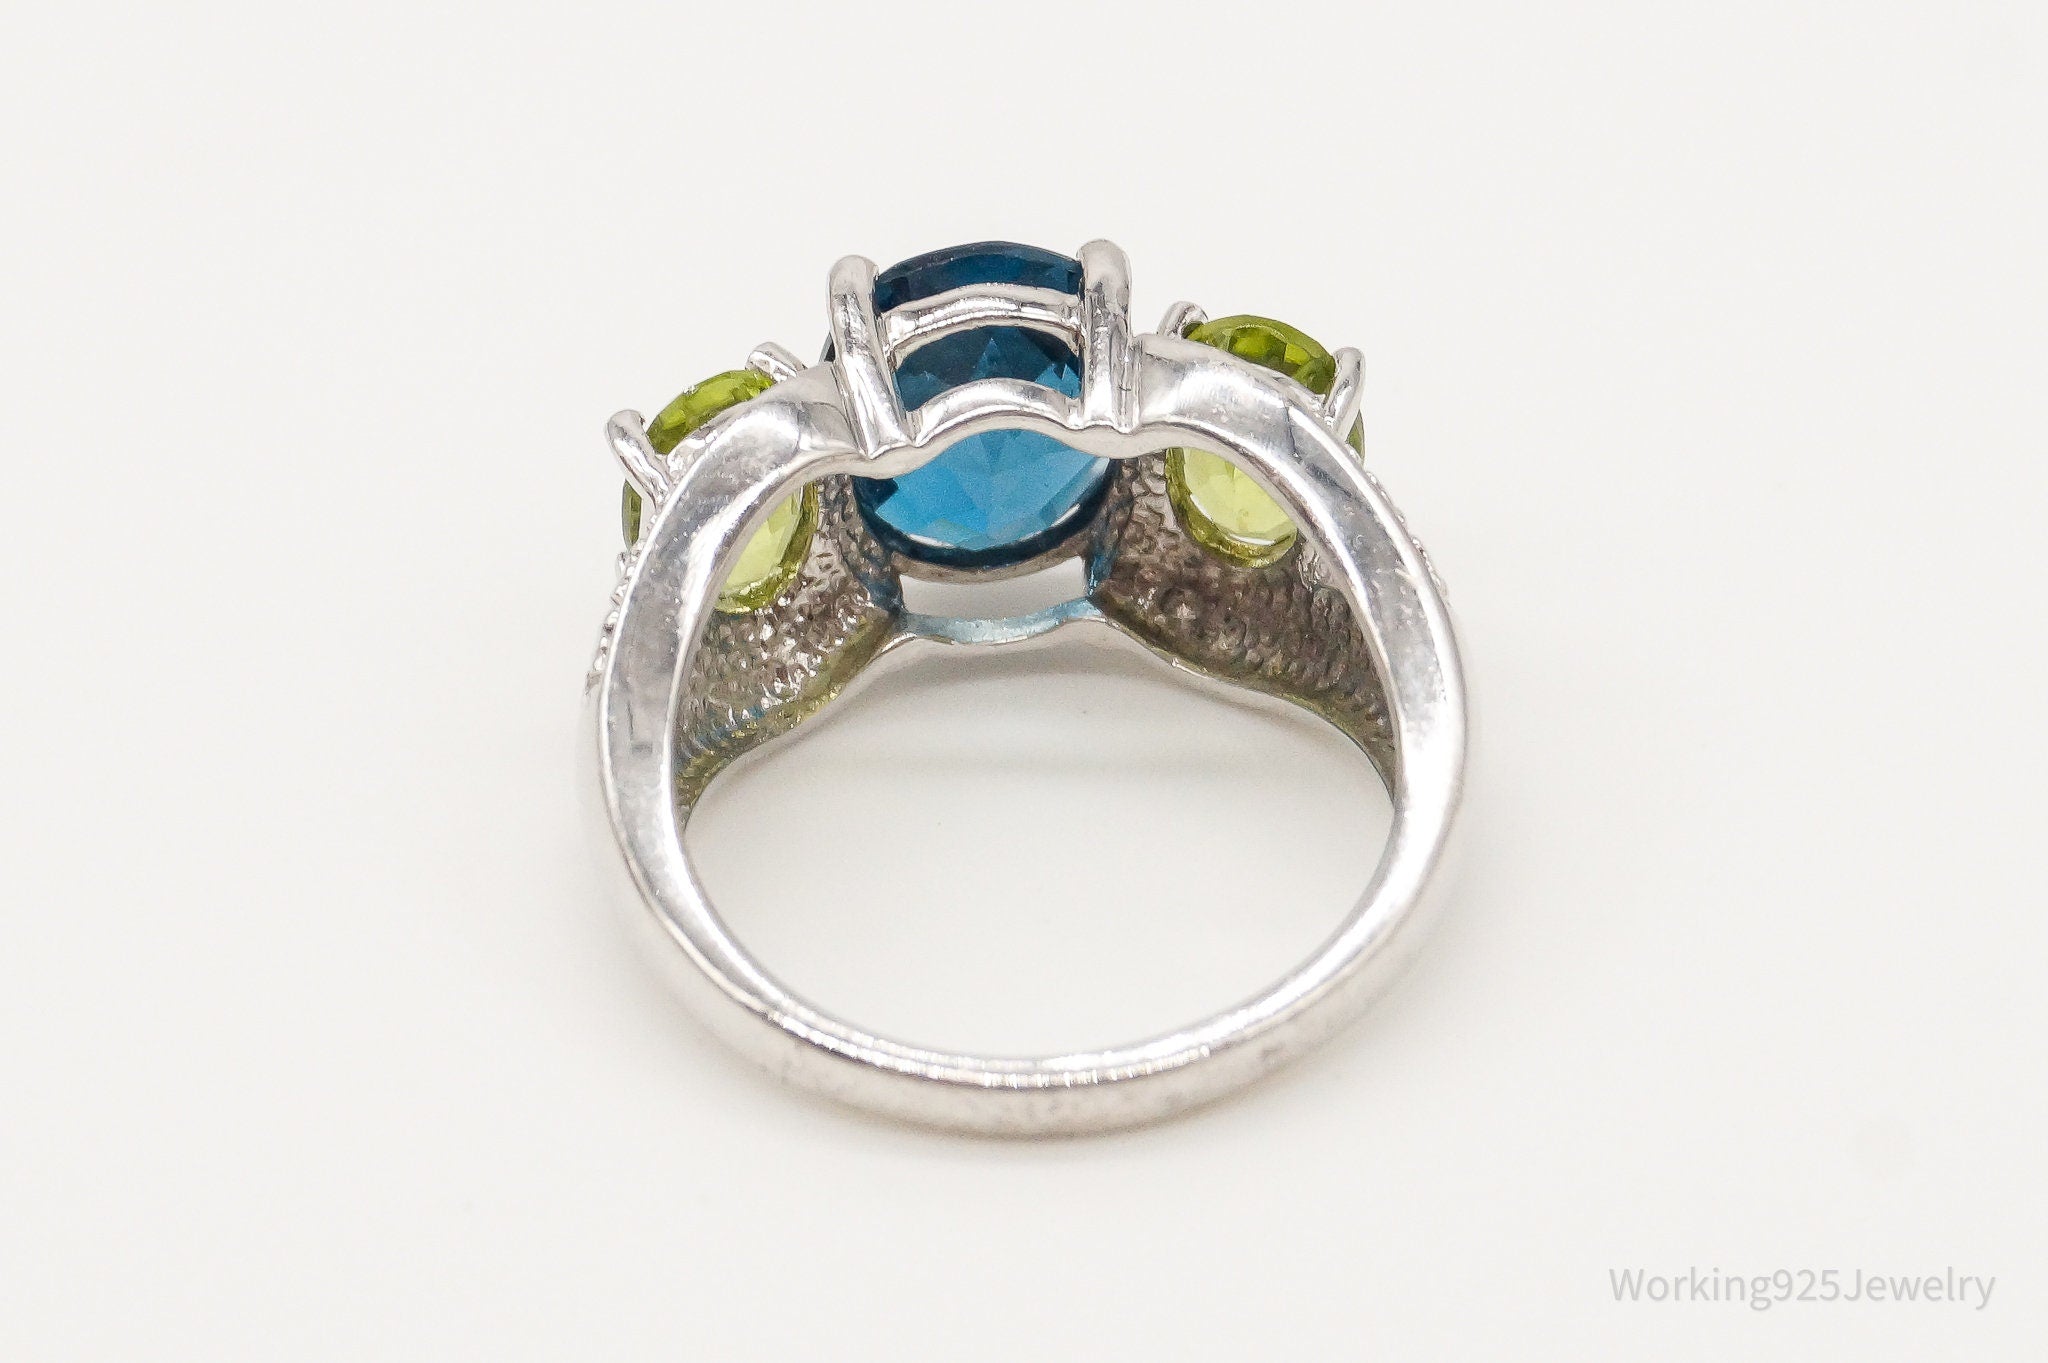 Designer CID Blue Topaz Peridot Cubic Zirconia Sterling Silver Ring - Size 6.25